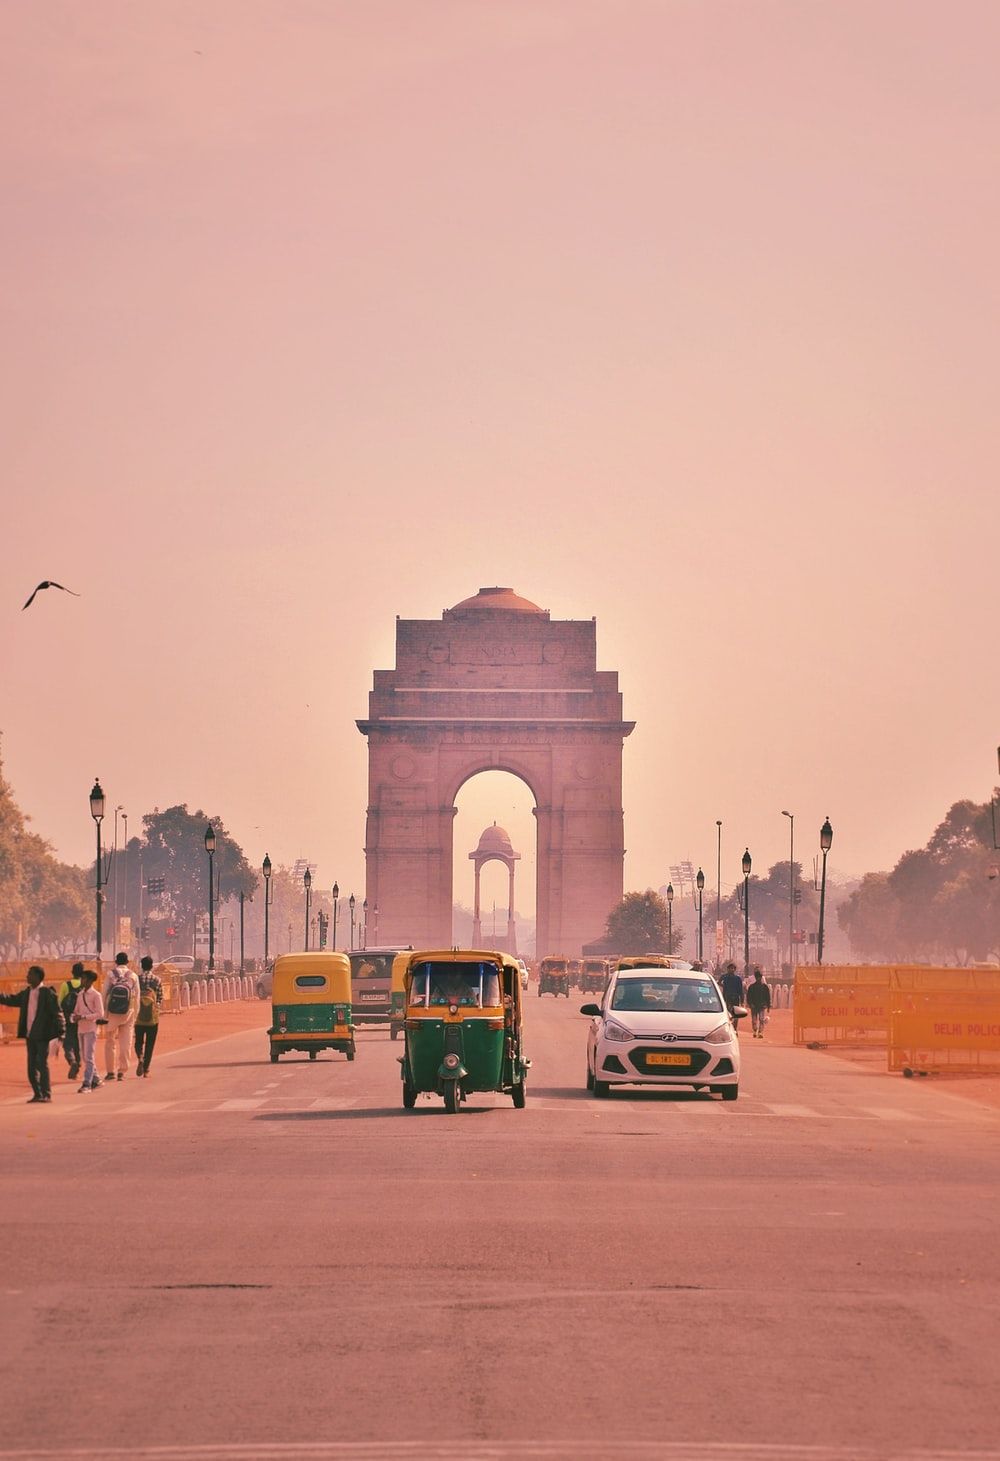 Delhi City Picture. Download Free Image